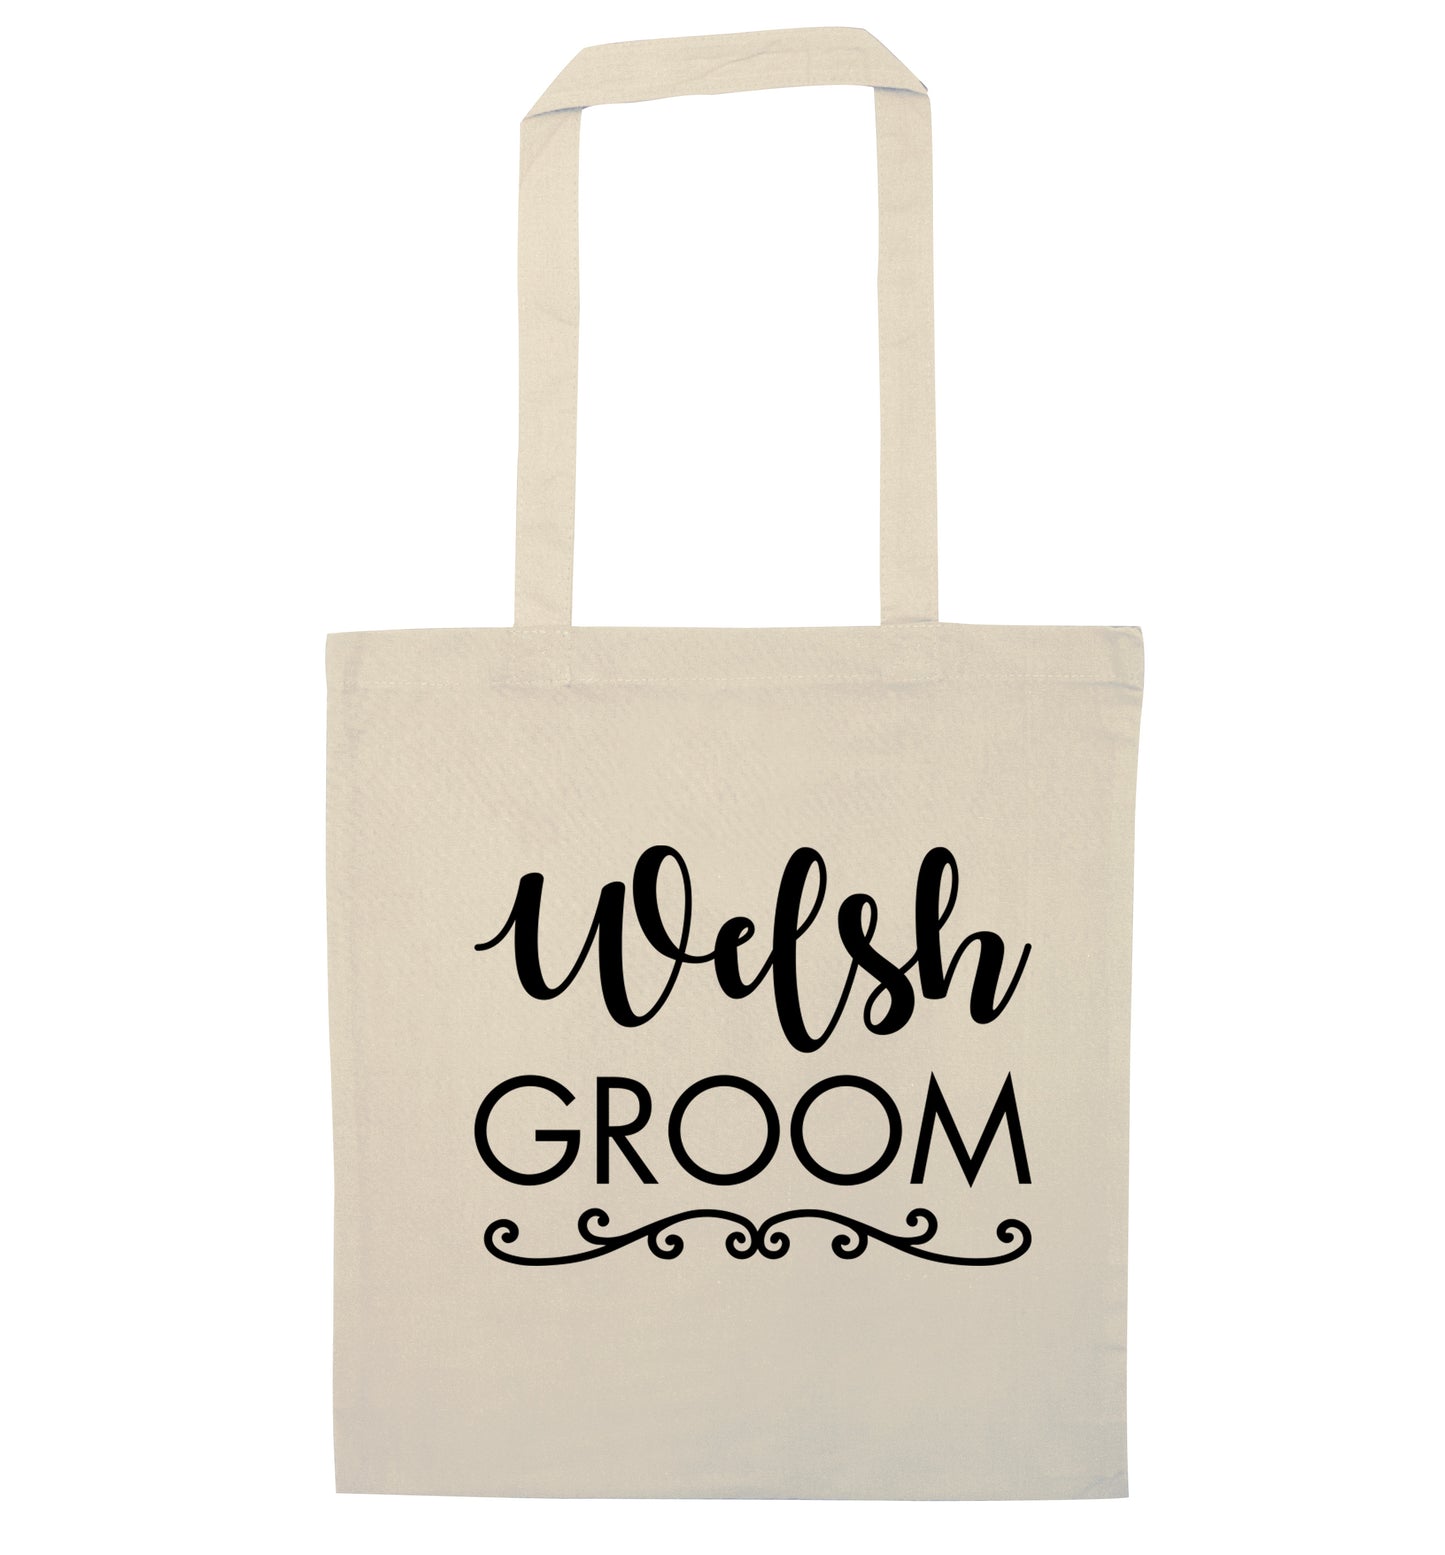 Welsh groom natural tote bag